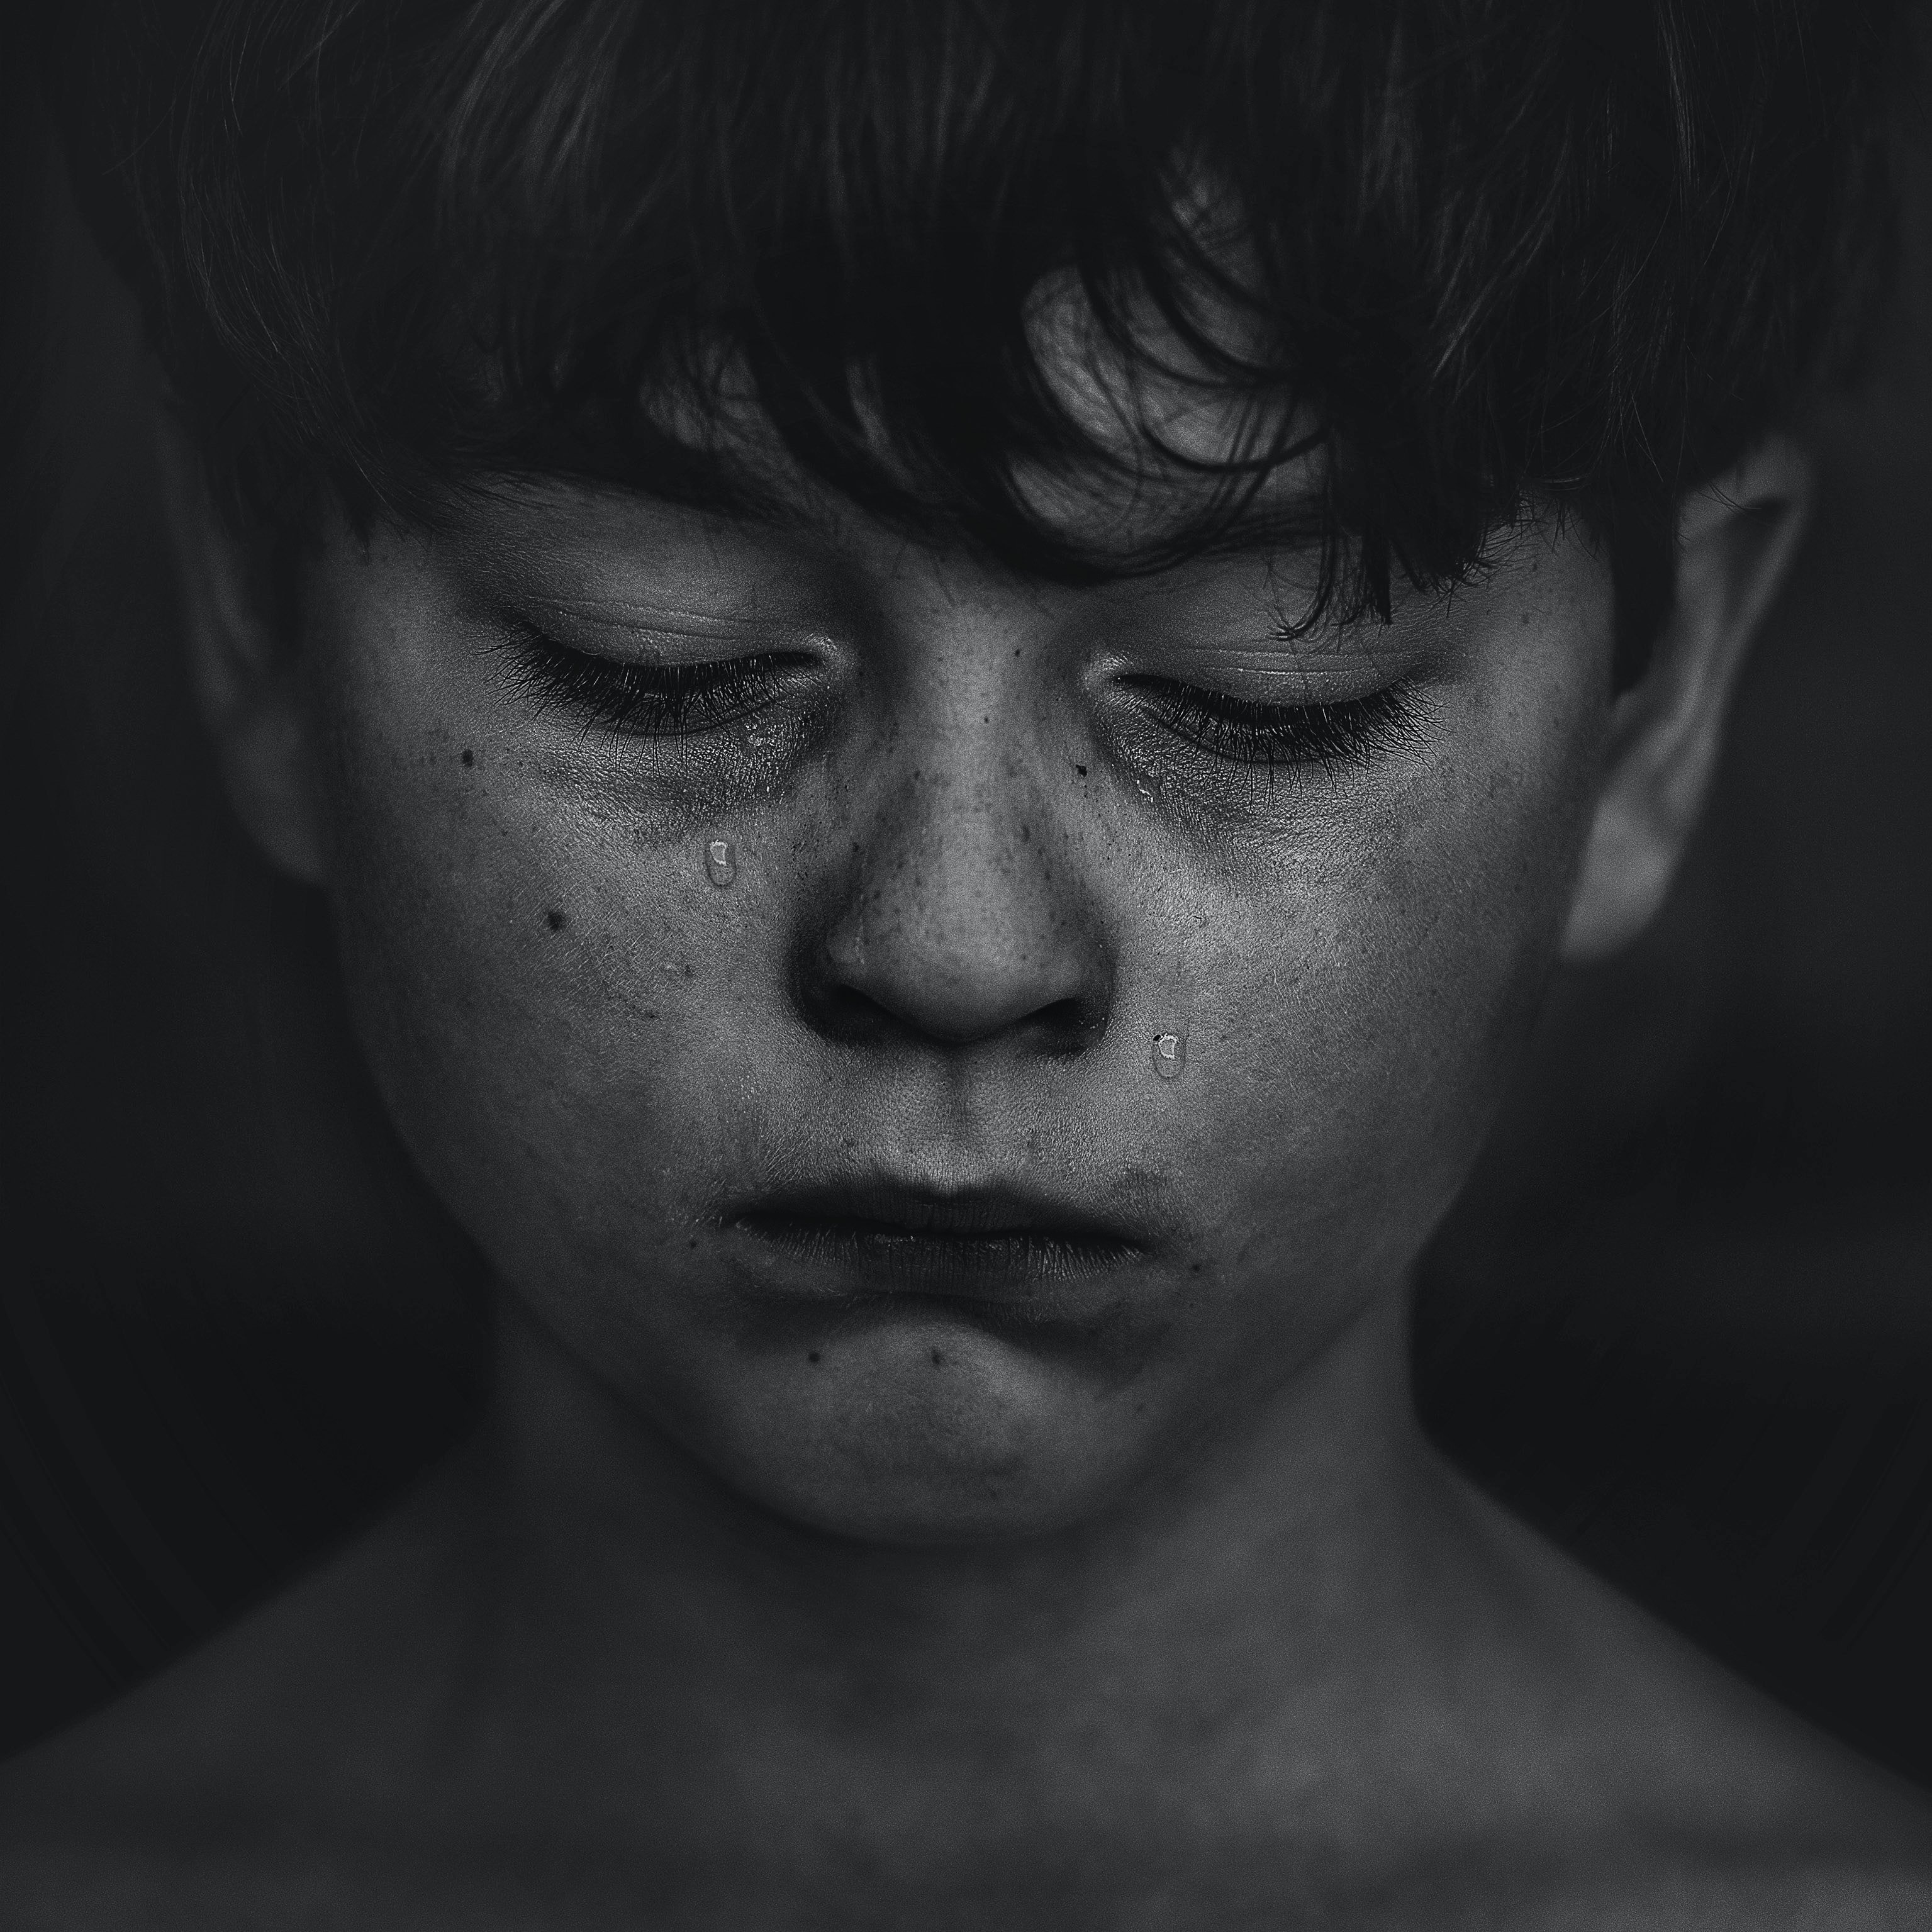 A boy crying | Source: Unsplash / Kat J